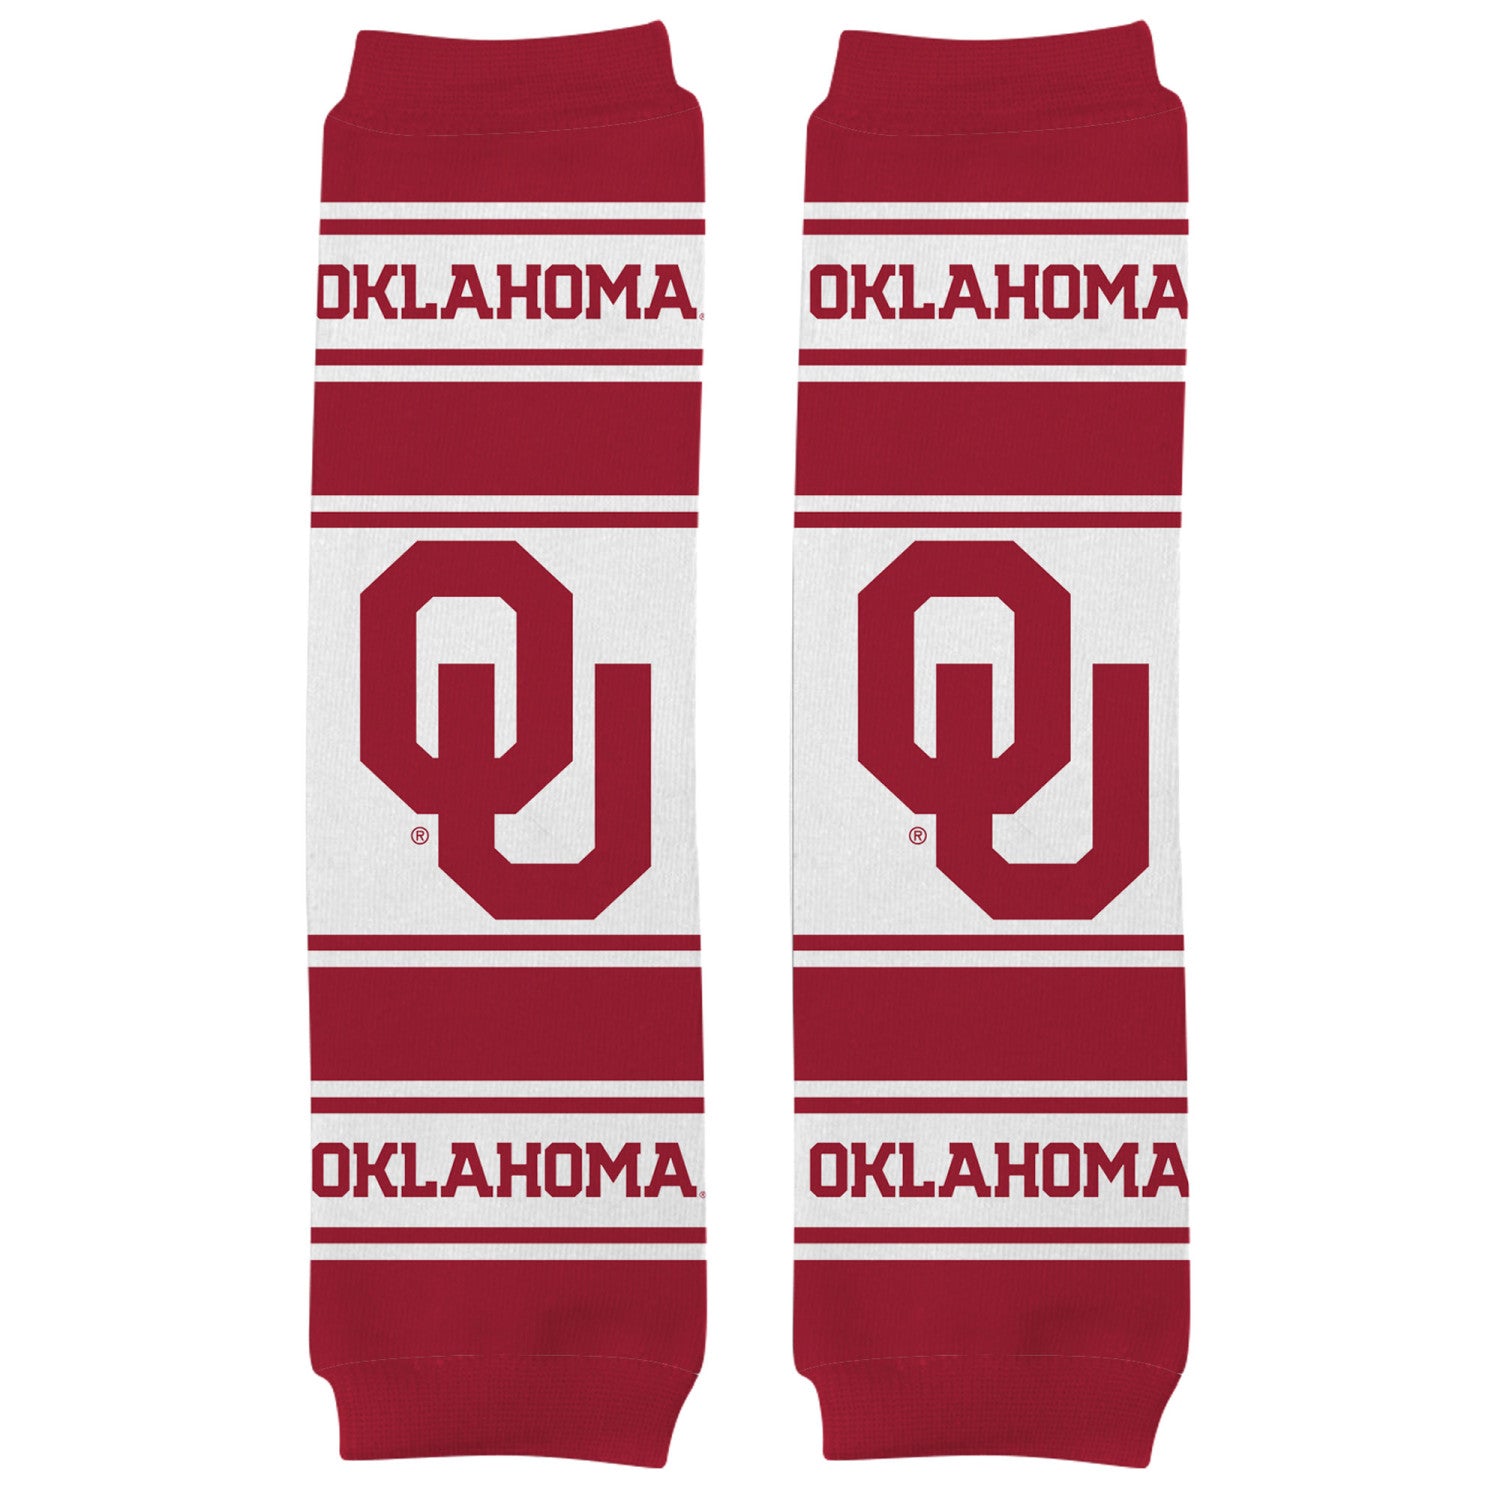 Oklahoma Sooners Baby Leg Warmers